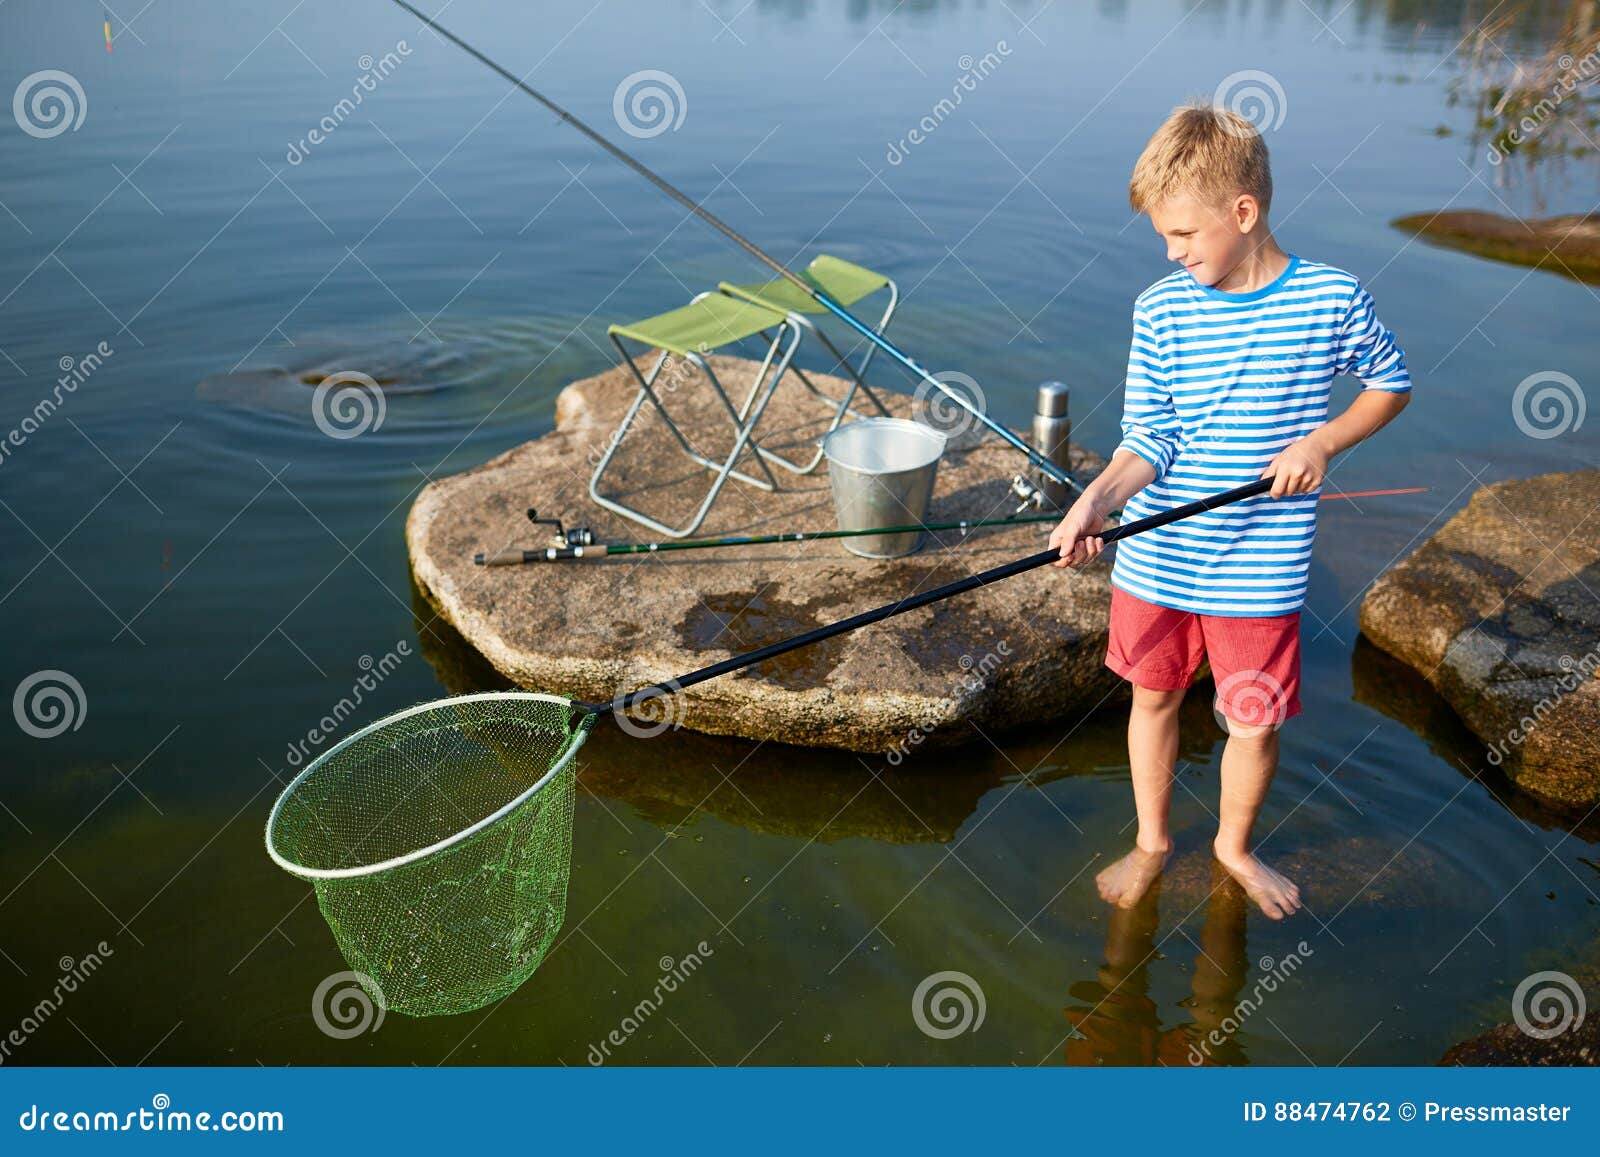 1,303 Boy Fishing Net Stock Photos - Free & Royalty-Free Stock